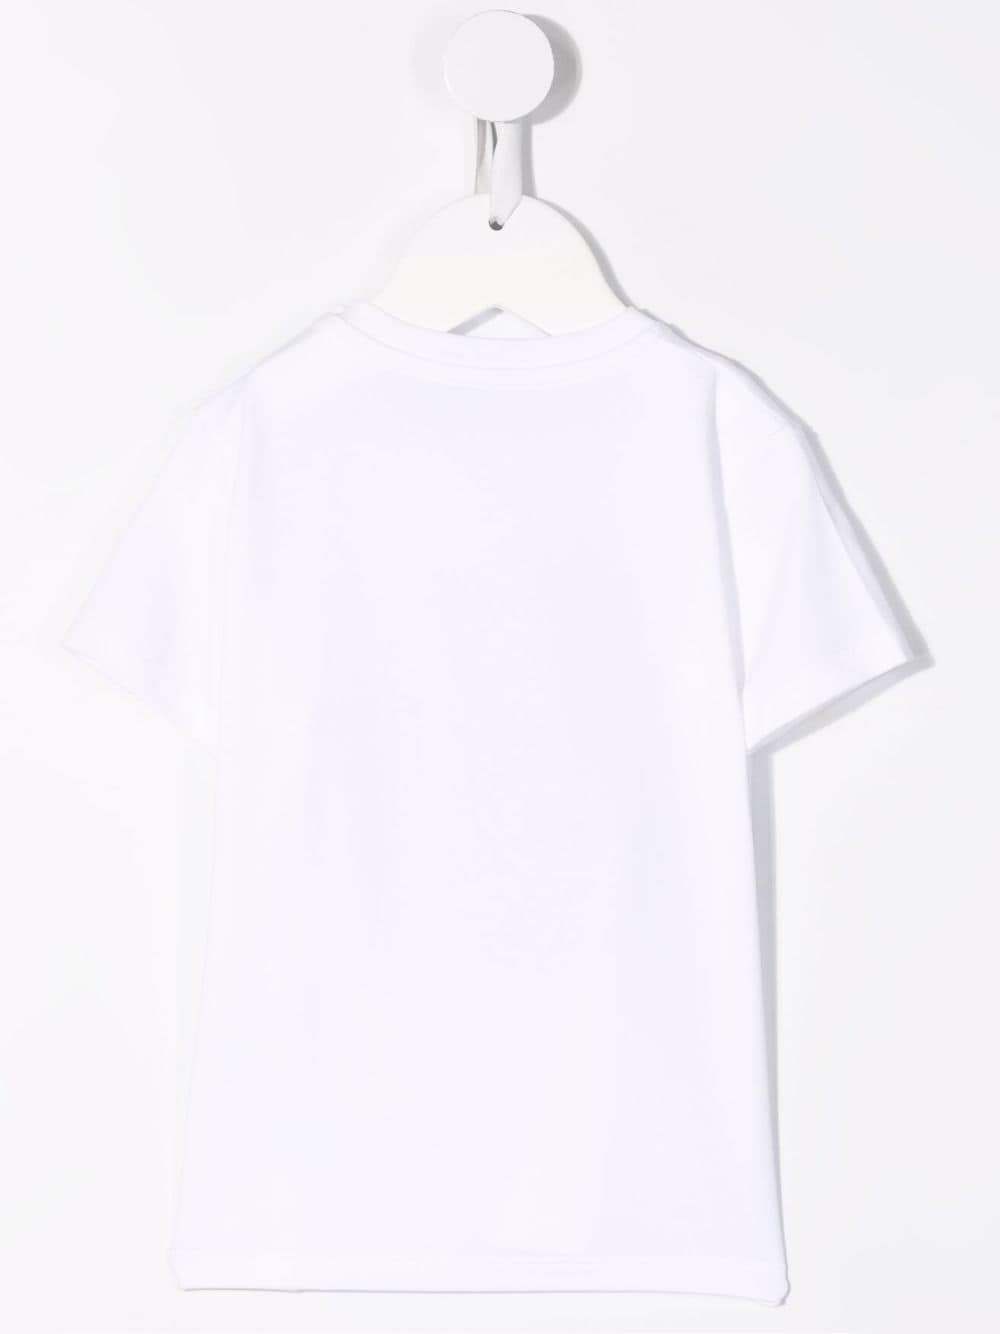 MONCLER BABY Logo T-Shirt White - MAISONDEFASHION.COM